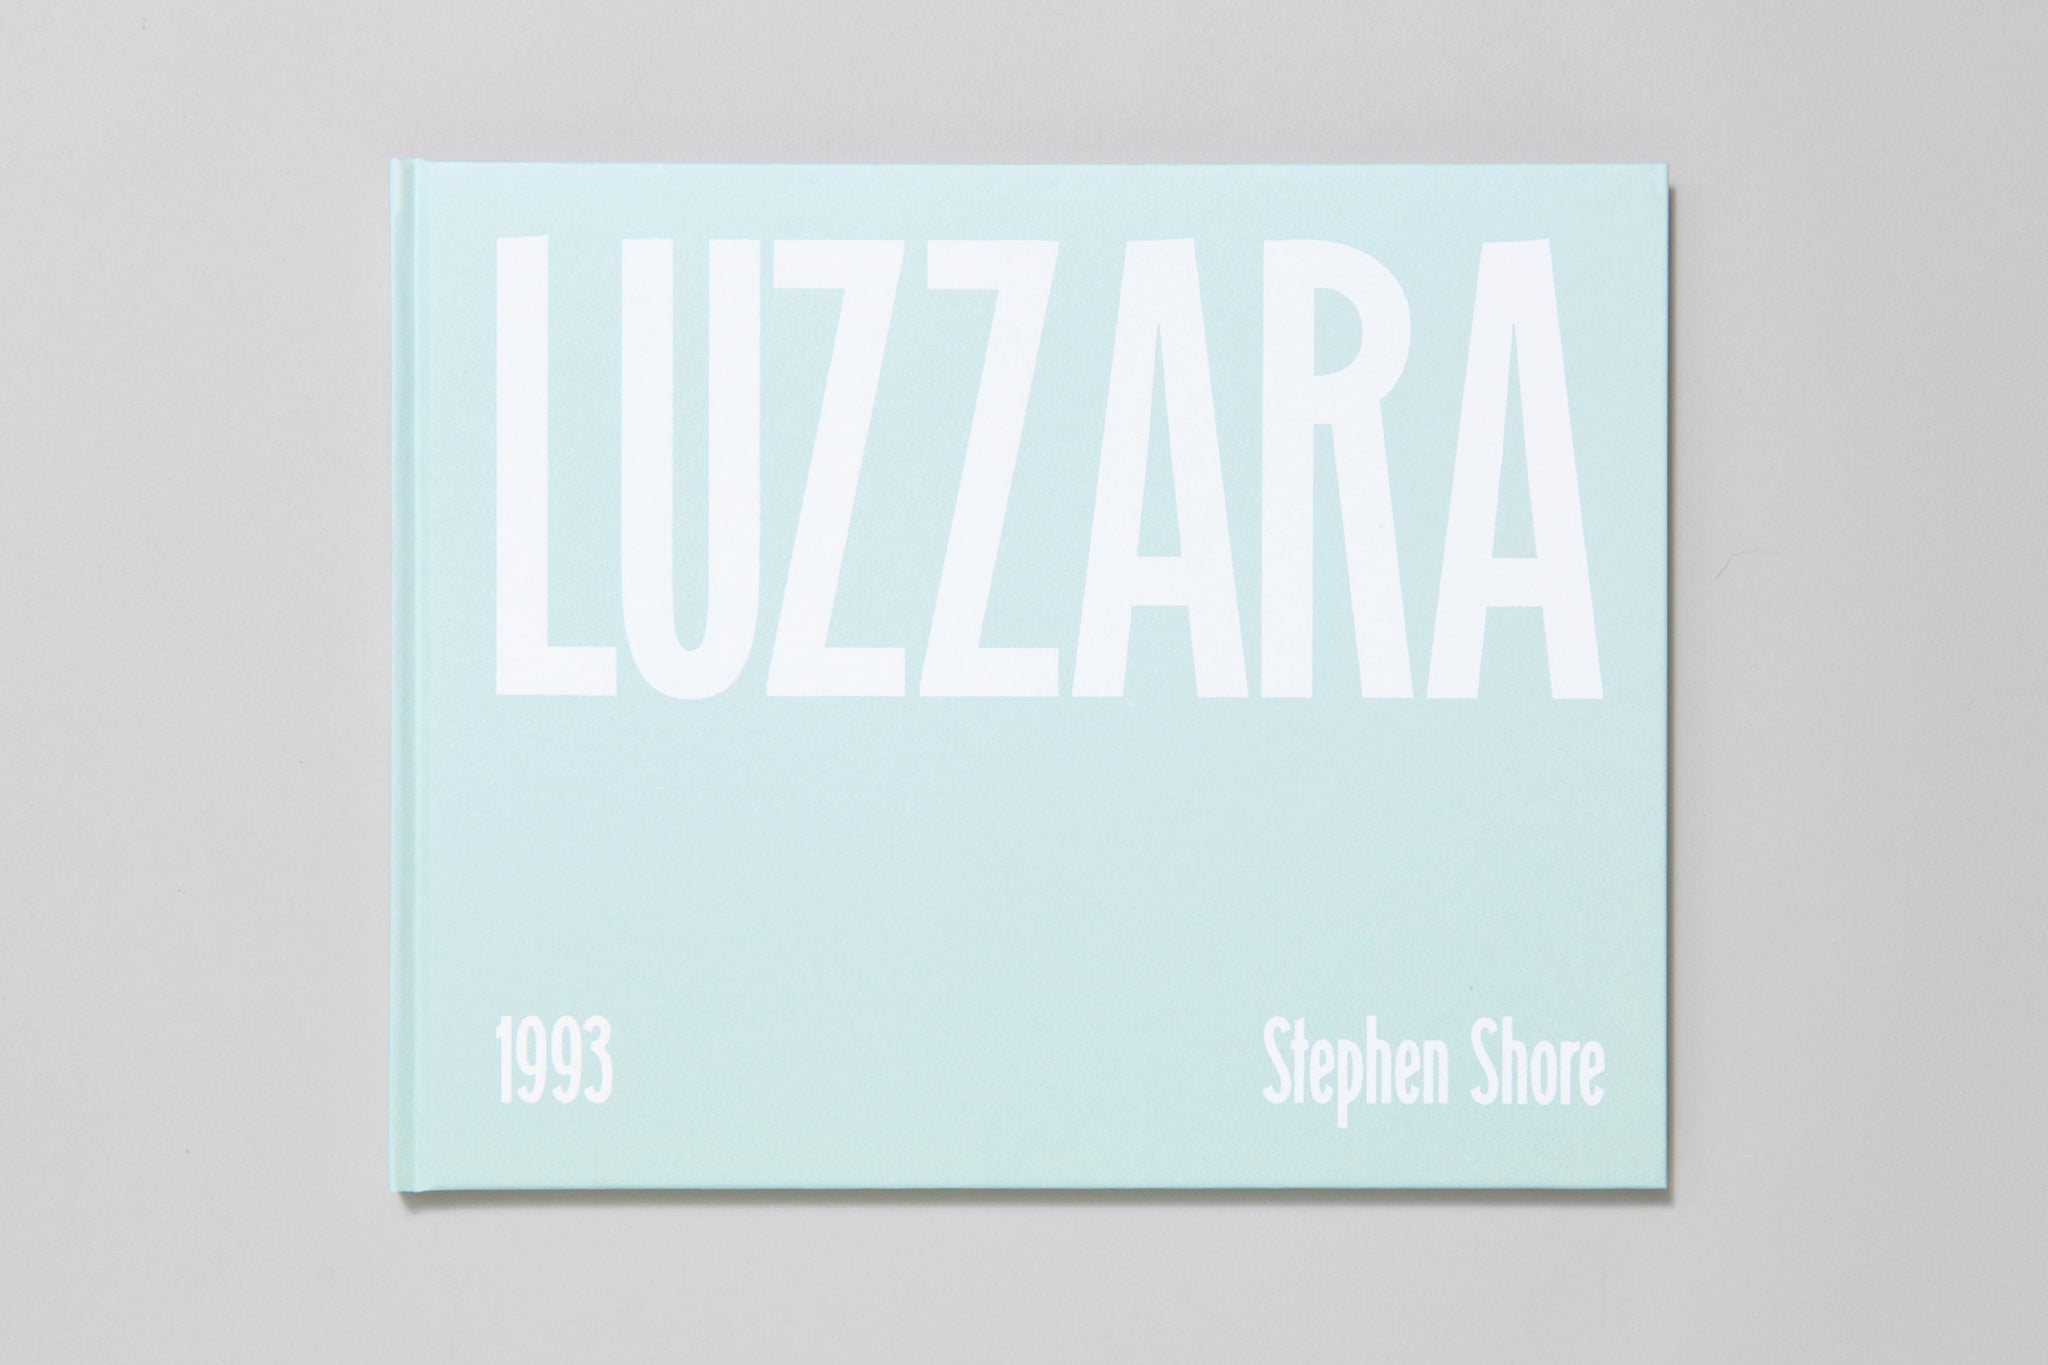 Luzzara